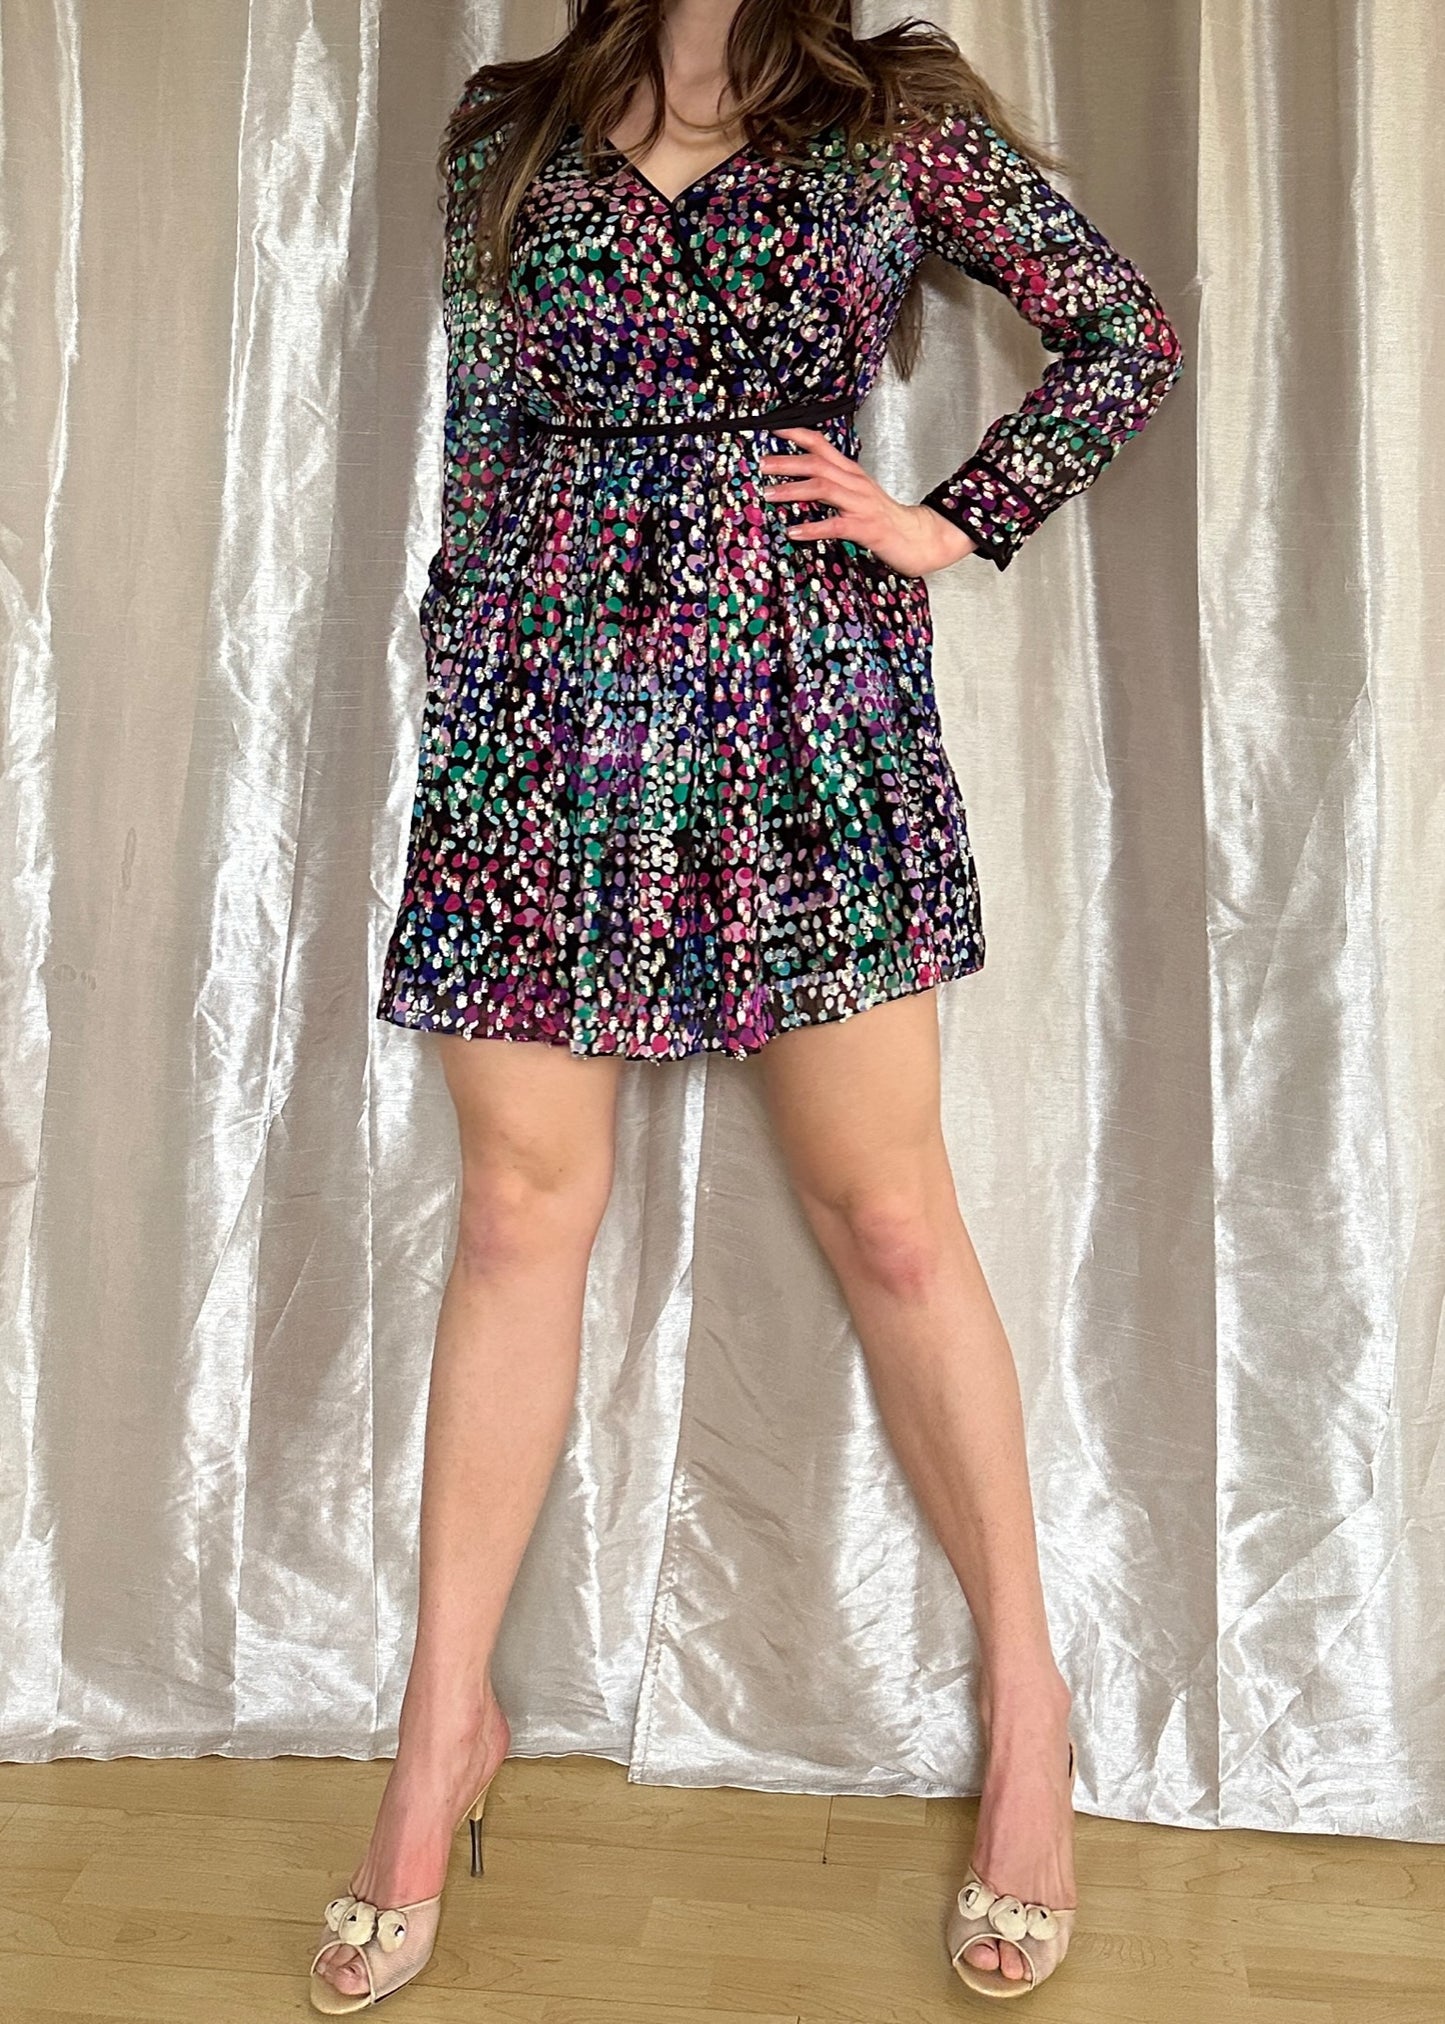 Kate Spade Multi-Color Metallic Thread Faux Wrap Dress Size 6